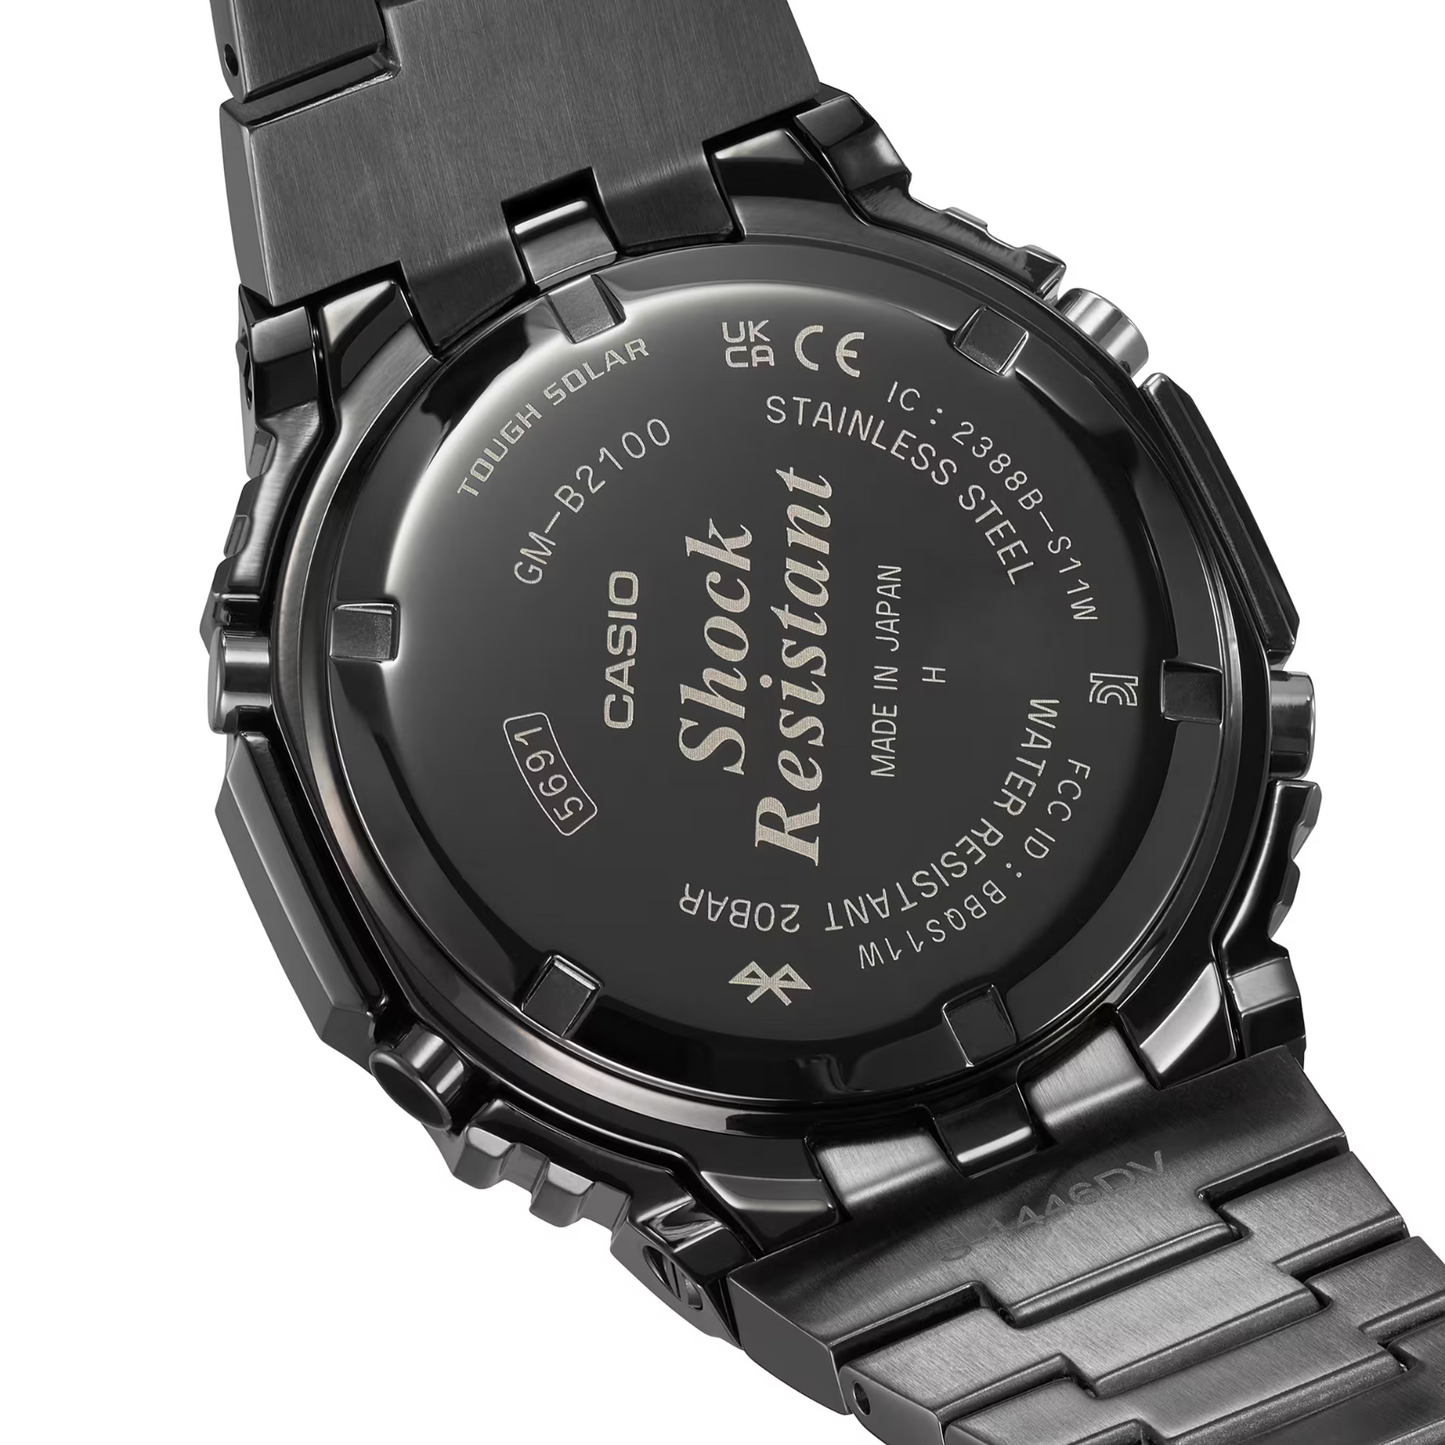 Casio G-Shock Analog Digital Full Metal Black IP Bluetooth Watch - GM-B2100BD-1